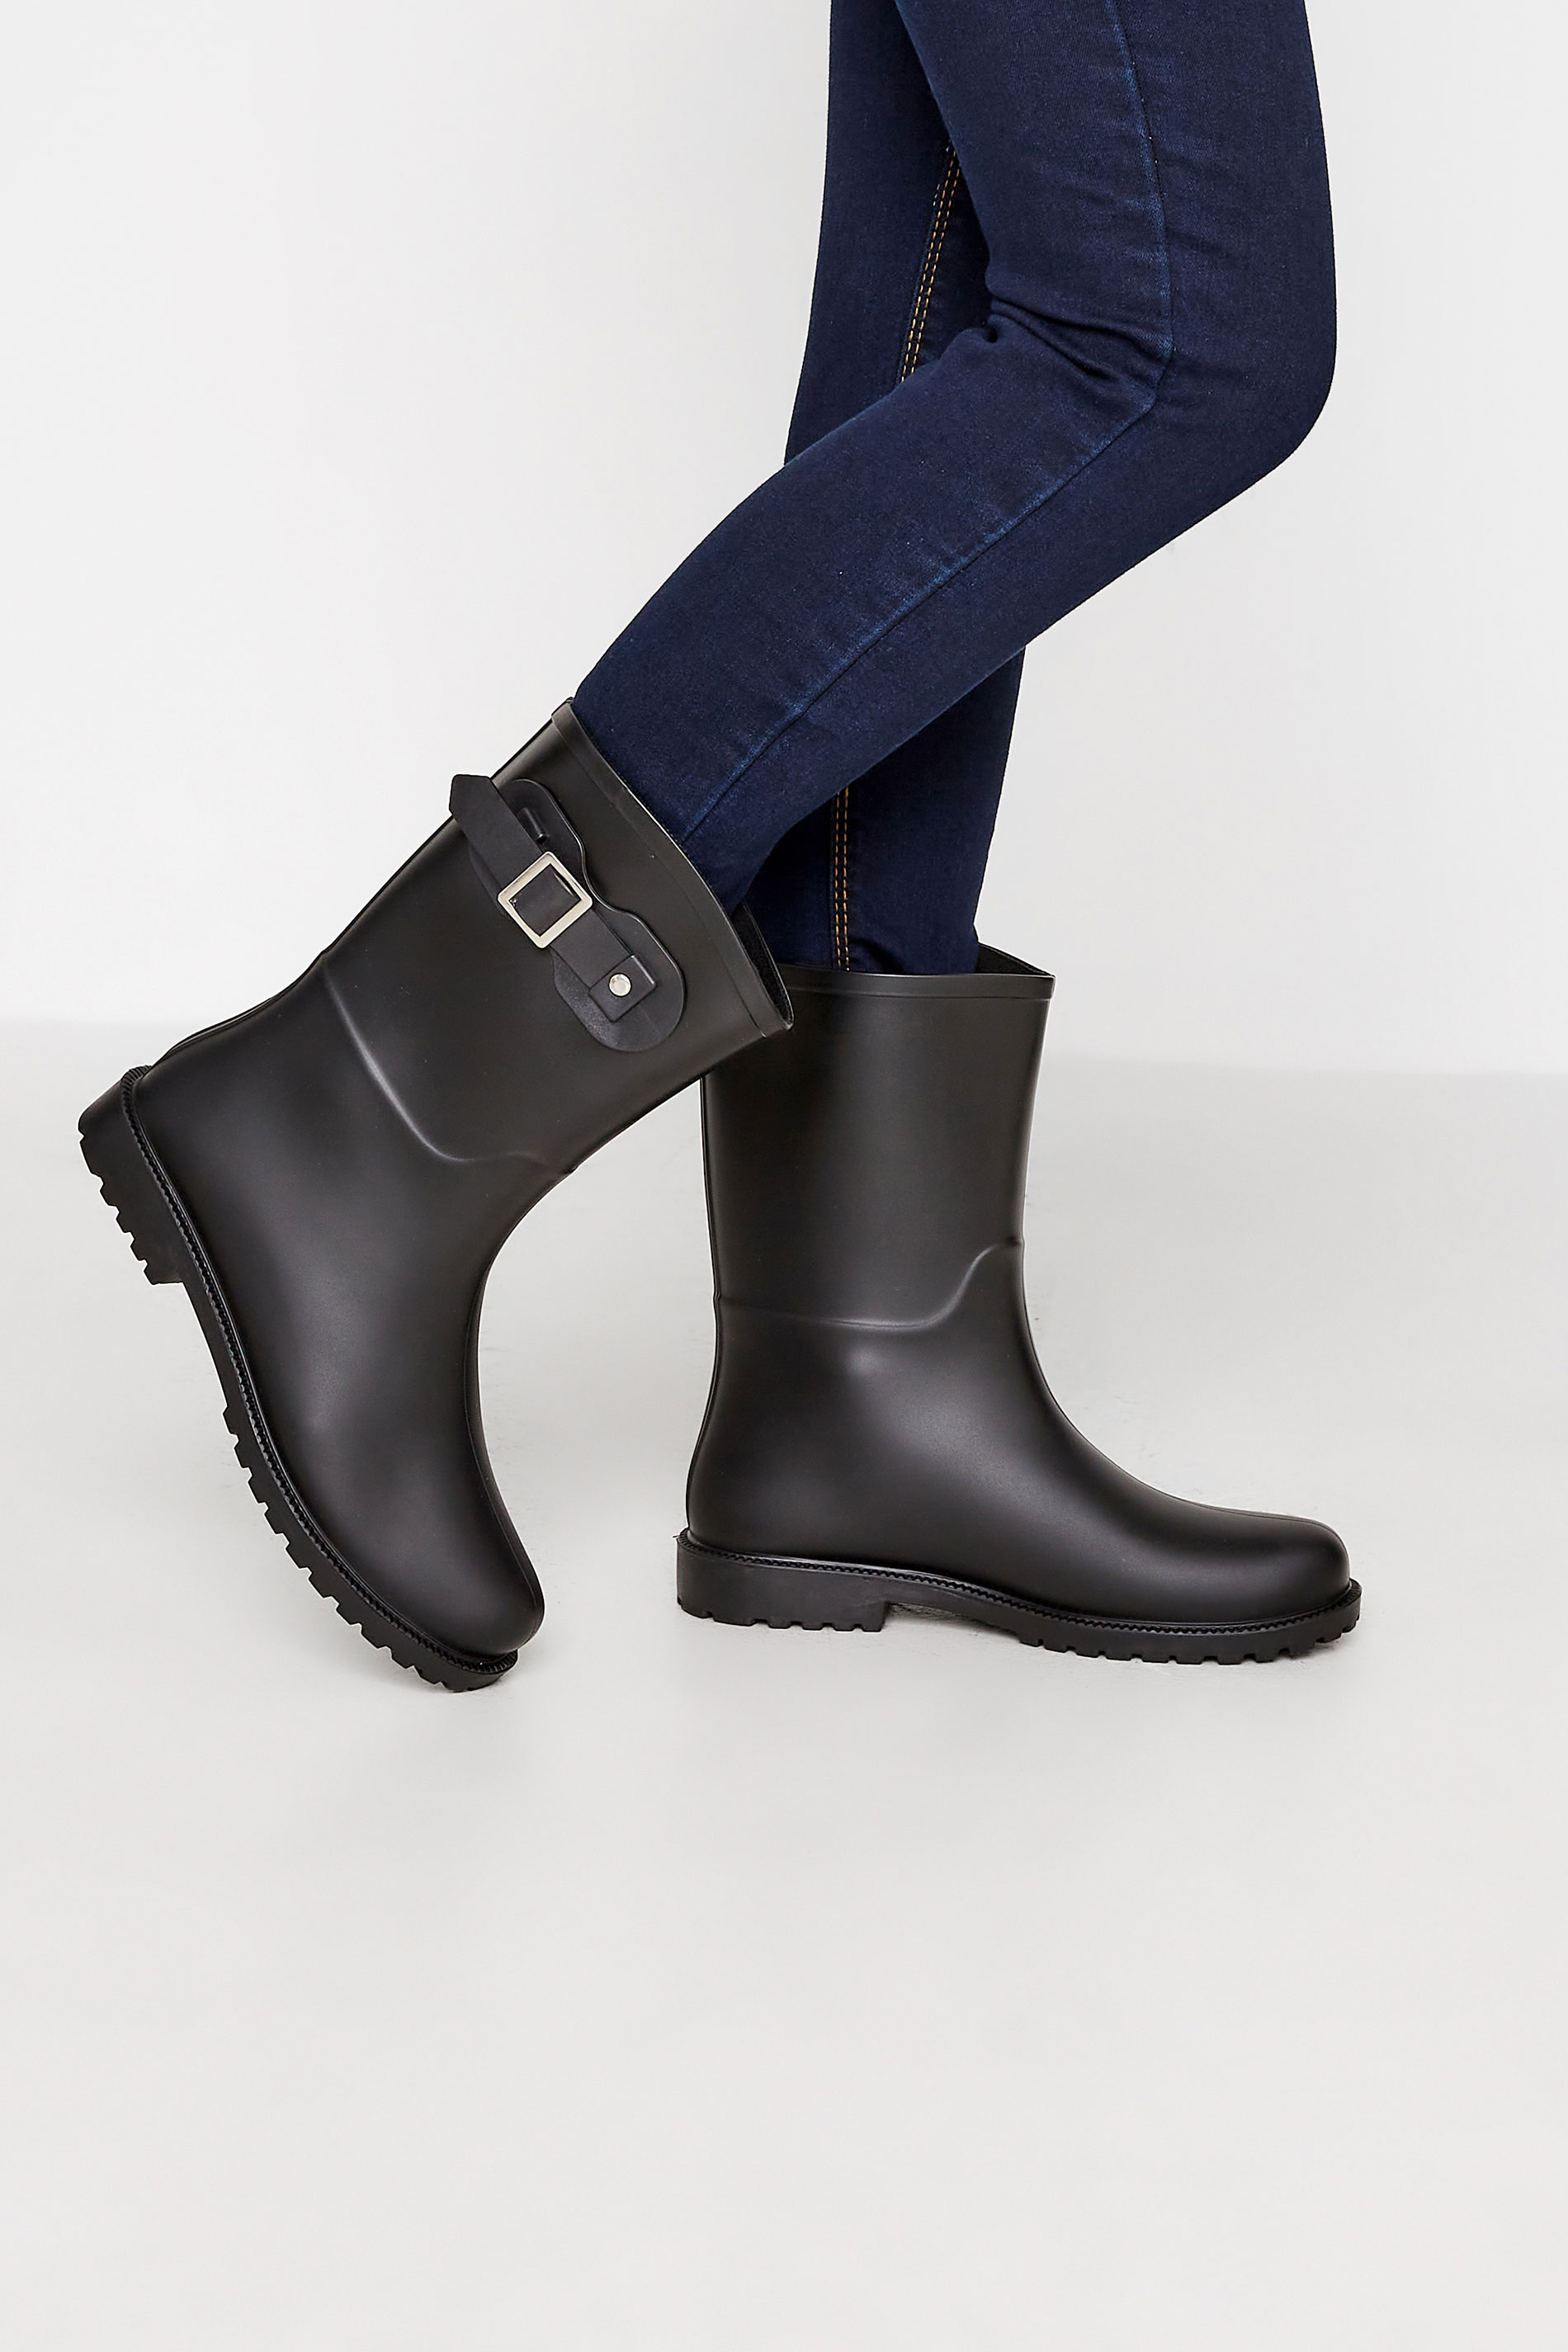 PixieGirl Black Buckle Welly Boots In Standard D Fit | PixieGirl 1